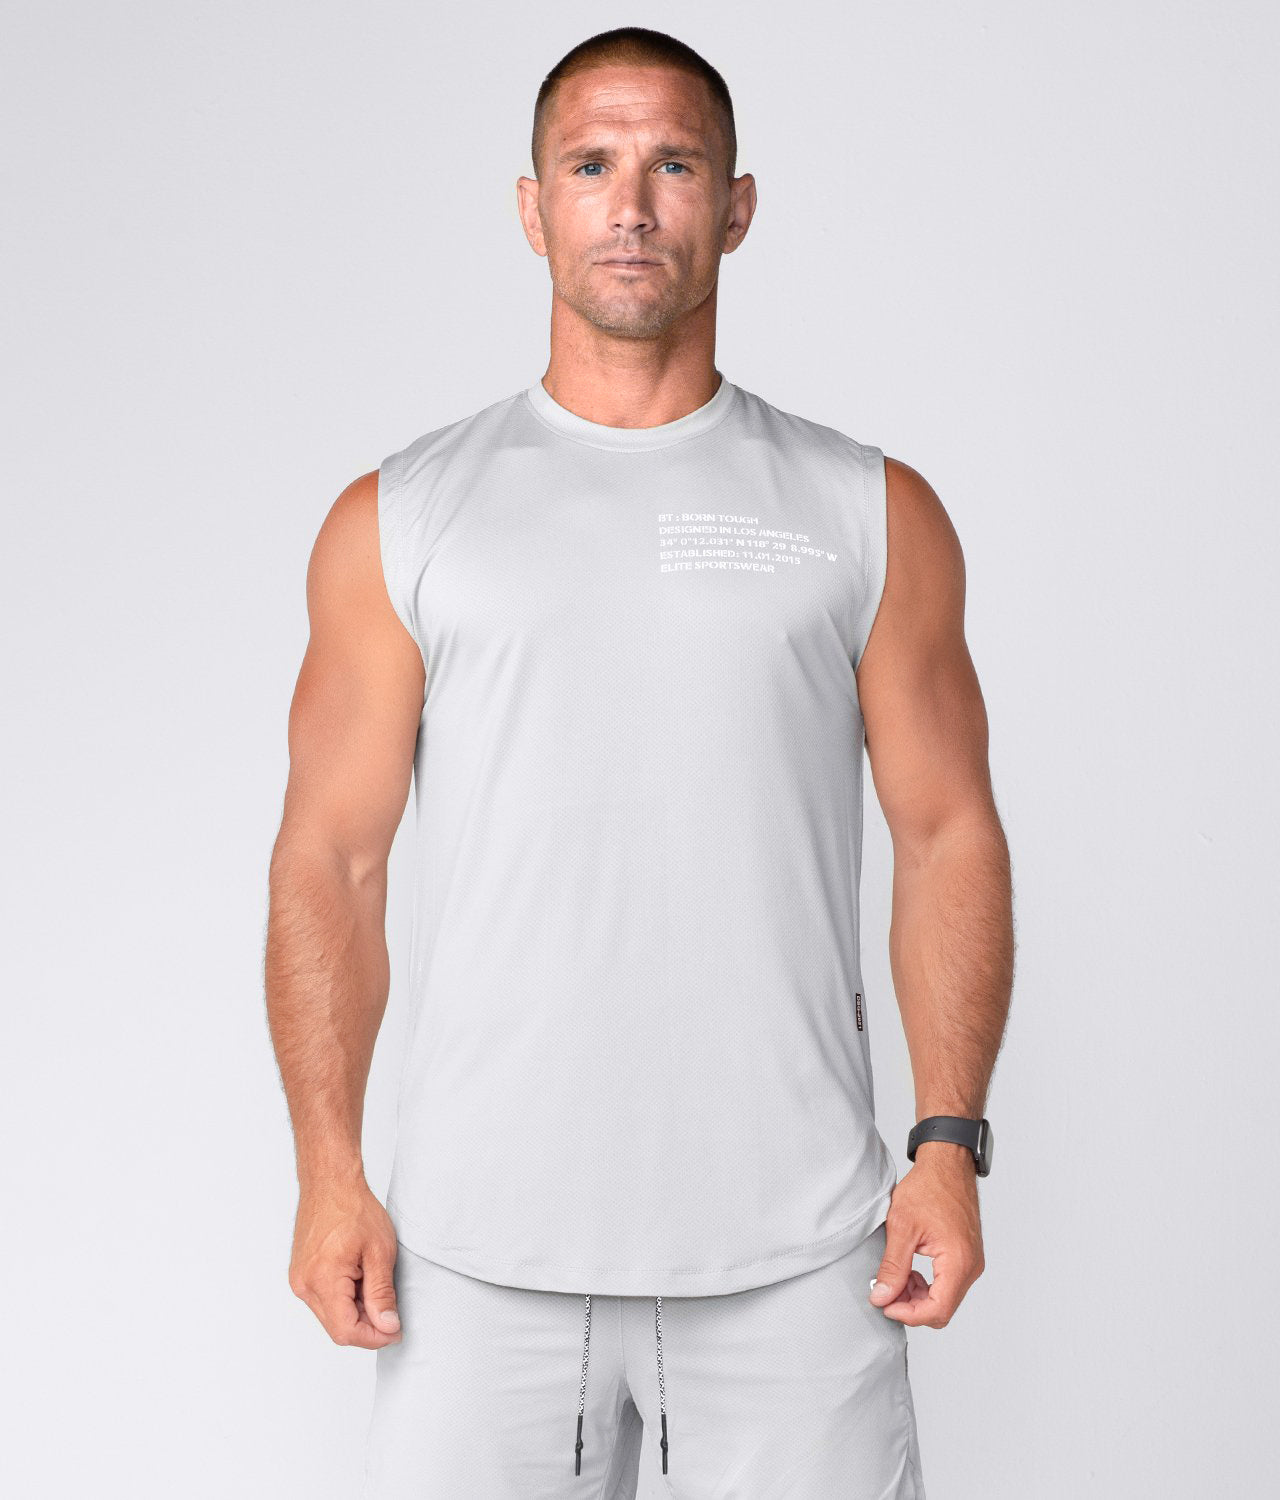 Born Tough Mens Sleeveless Oversized Gym Workout Shirt, Athletic Cutoff  Design Bodybuilding, Running Sleeveless Top for Men